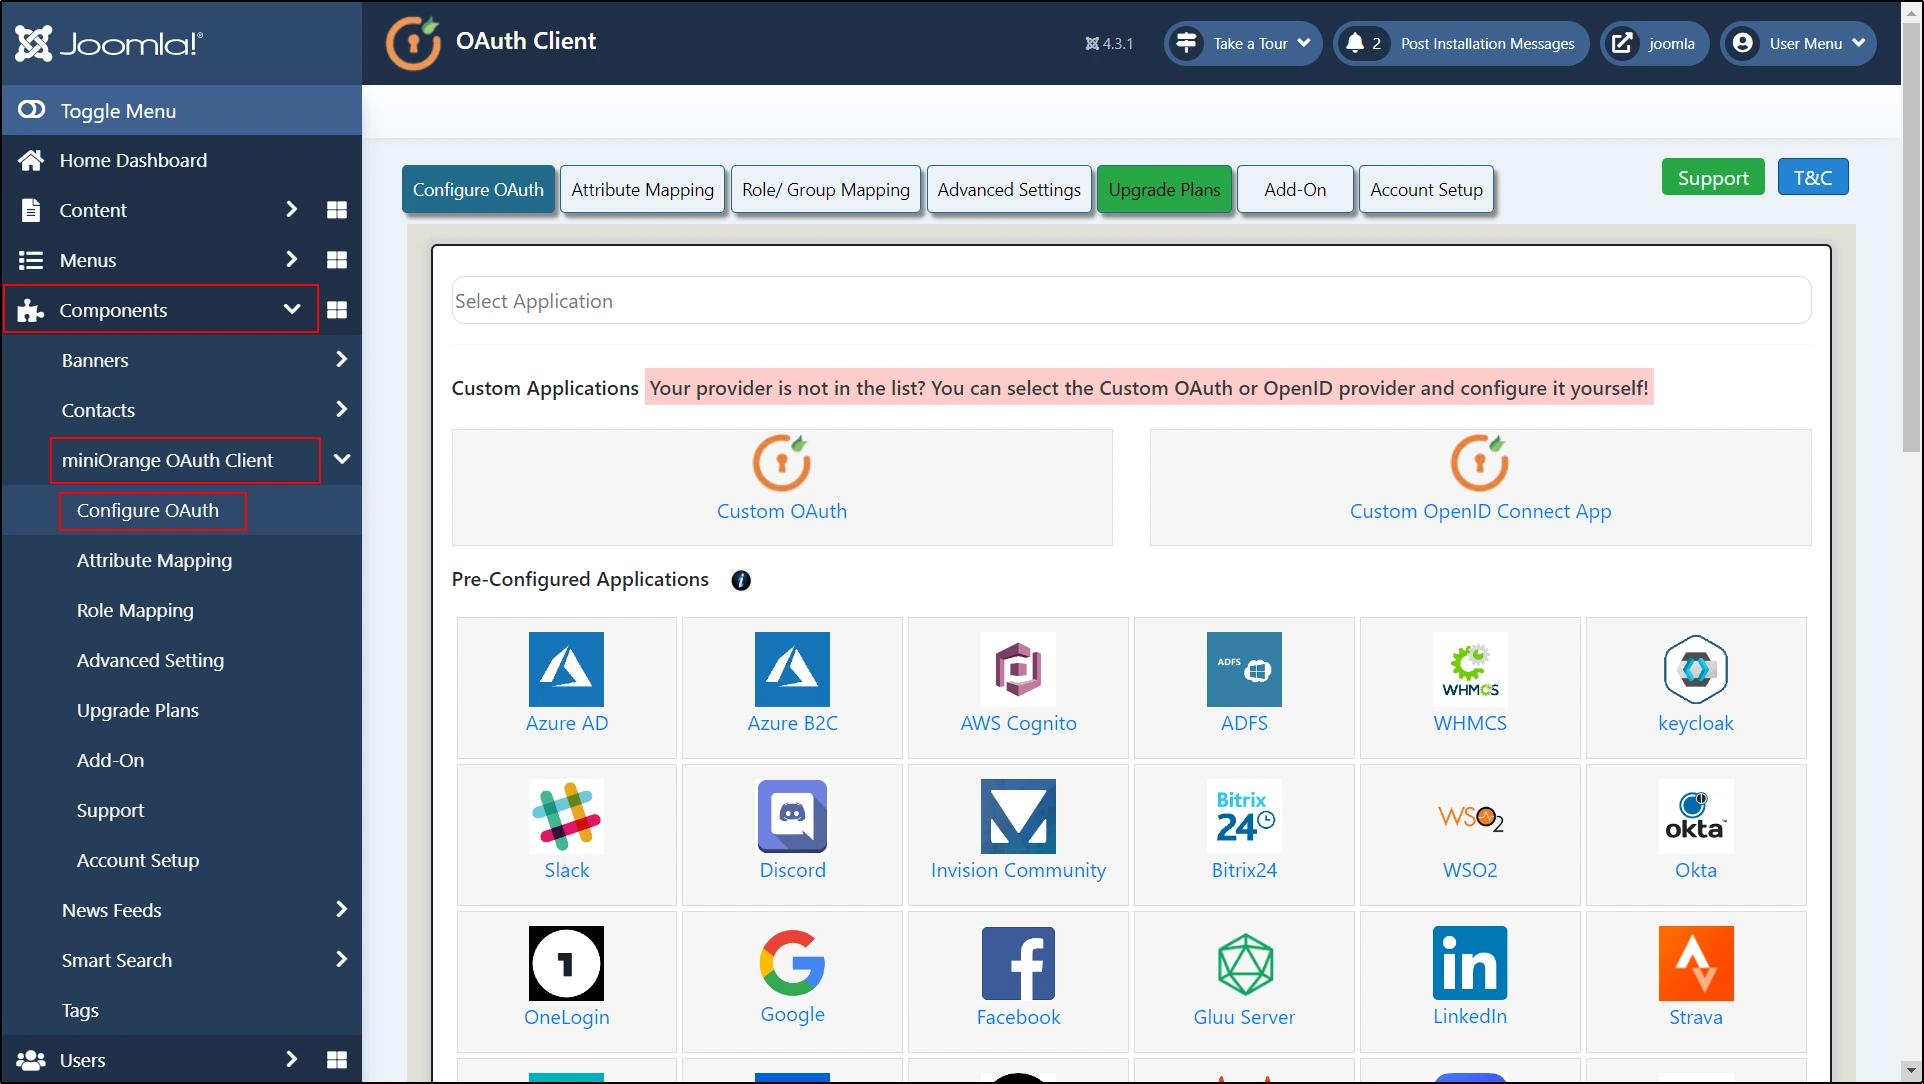 Joomla OAuth Client Single Sign-On - Select Custom Application